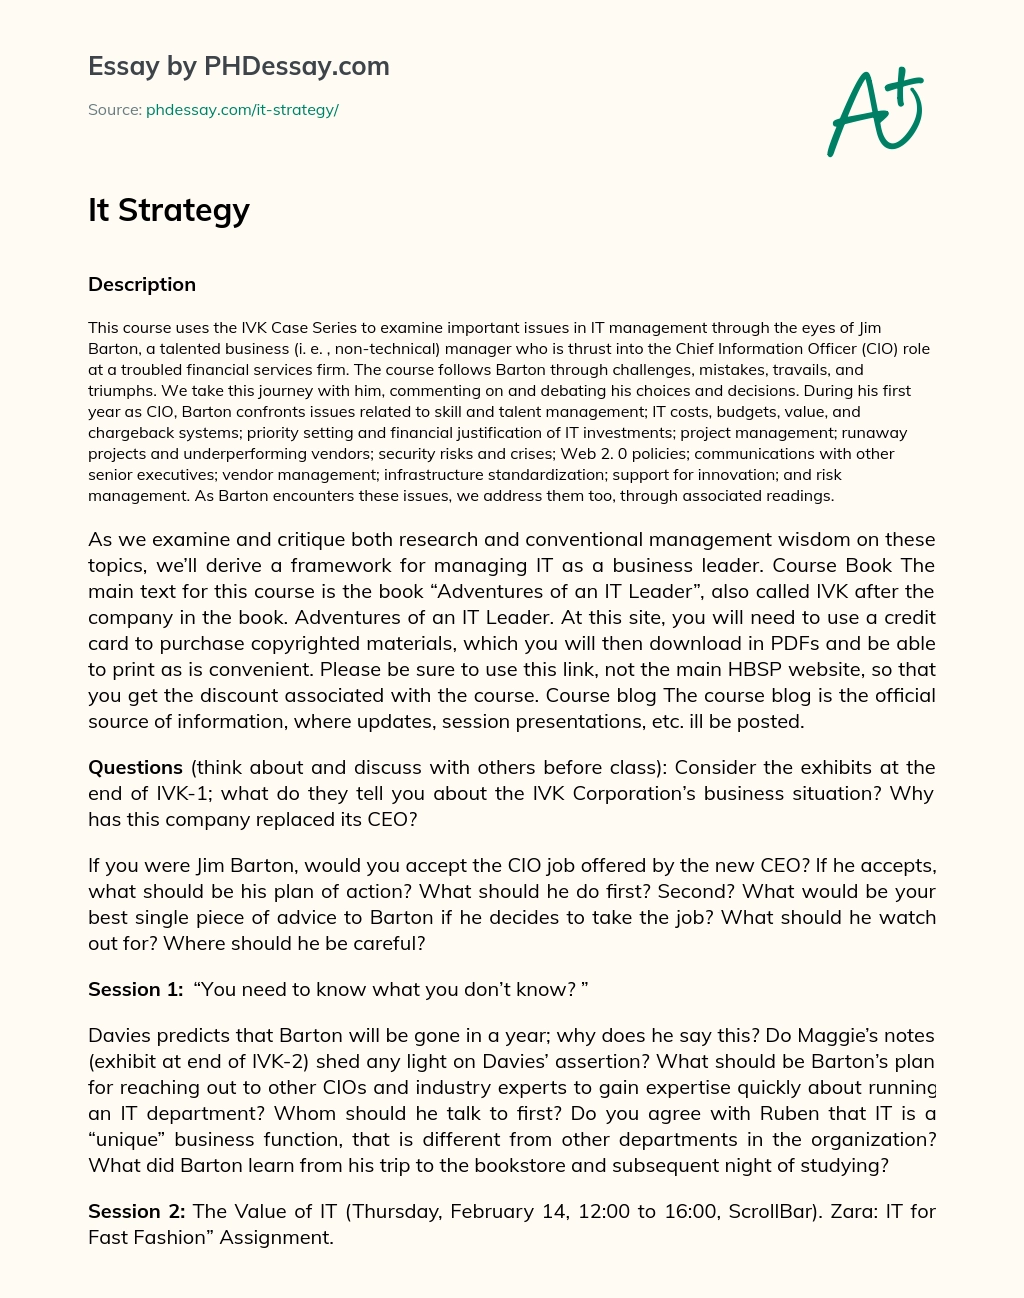 It Strategy essay